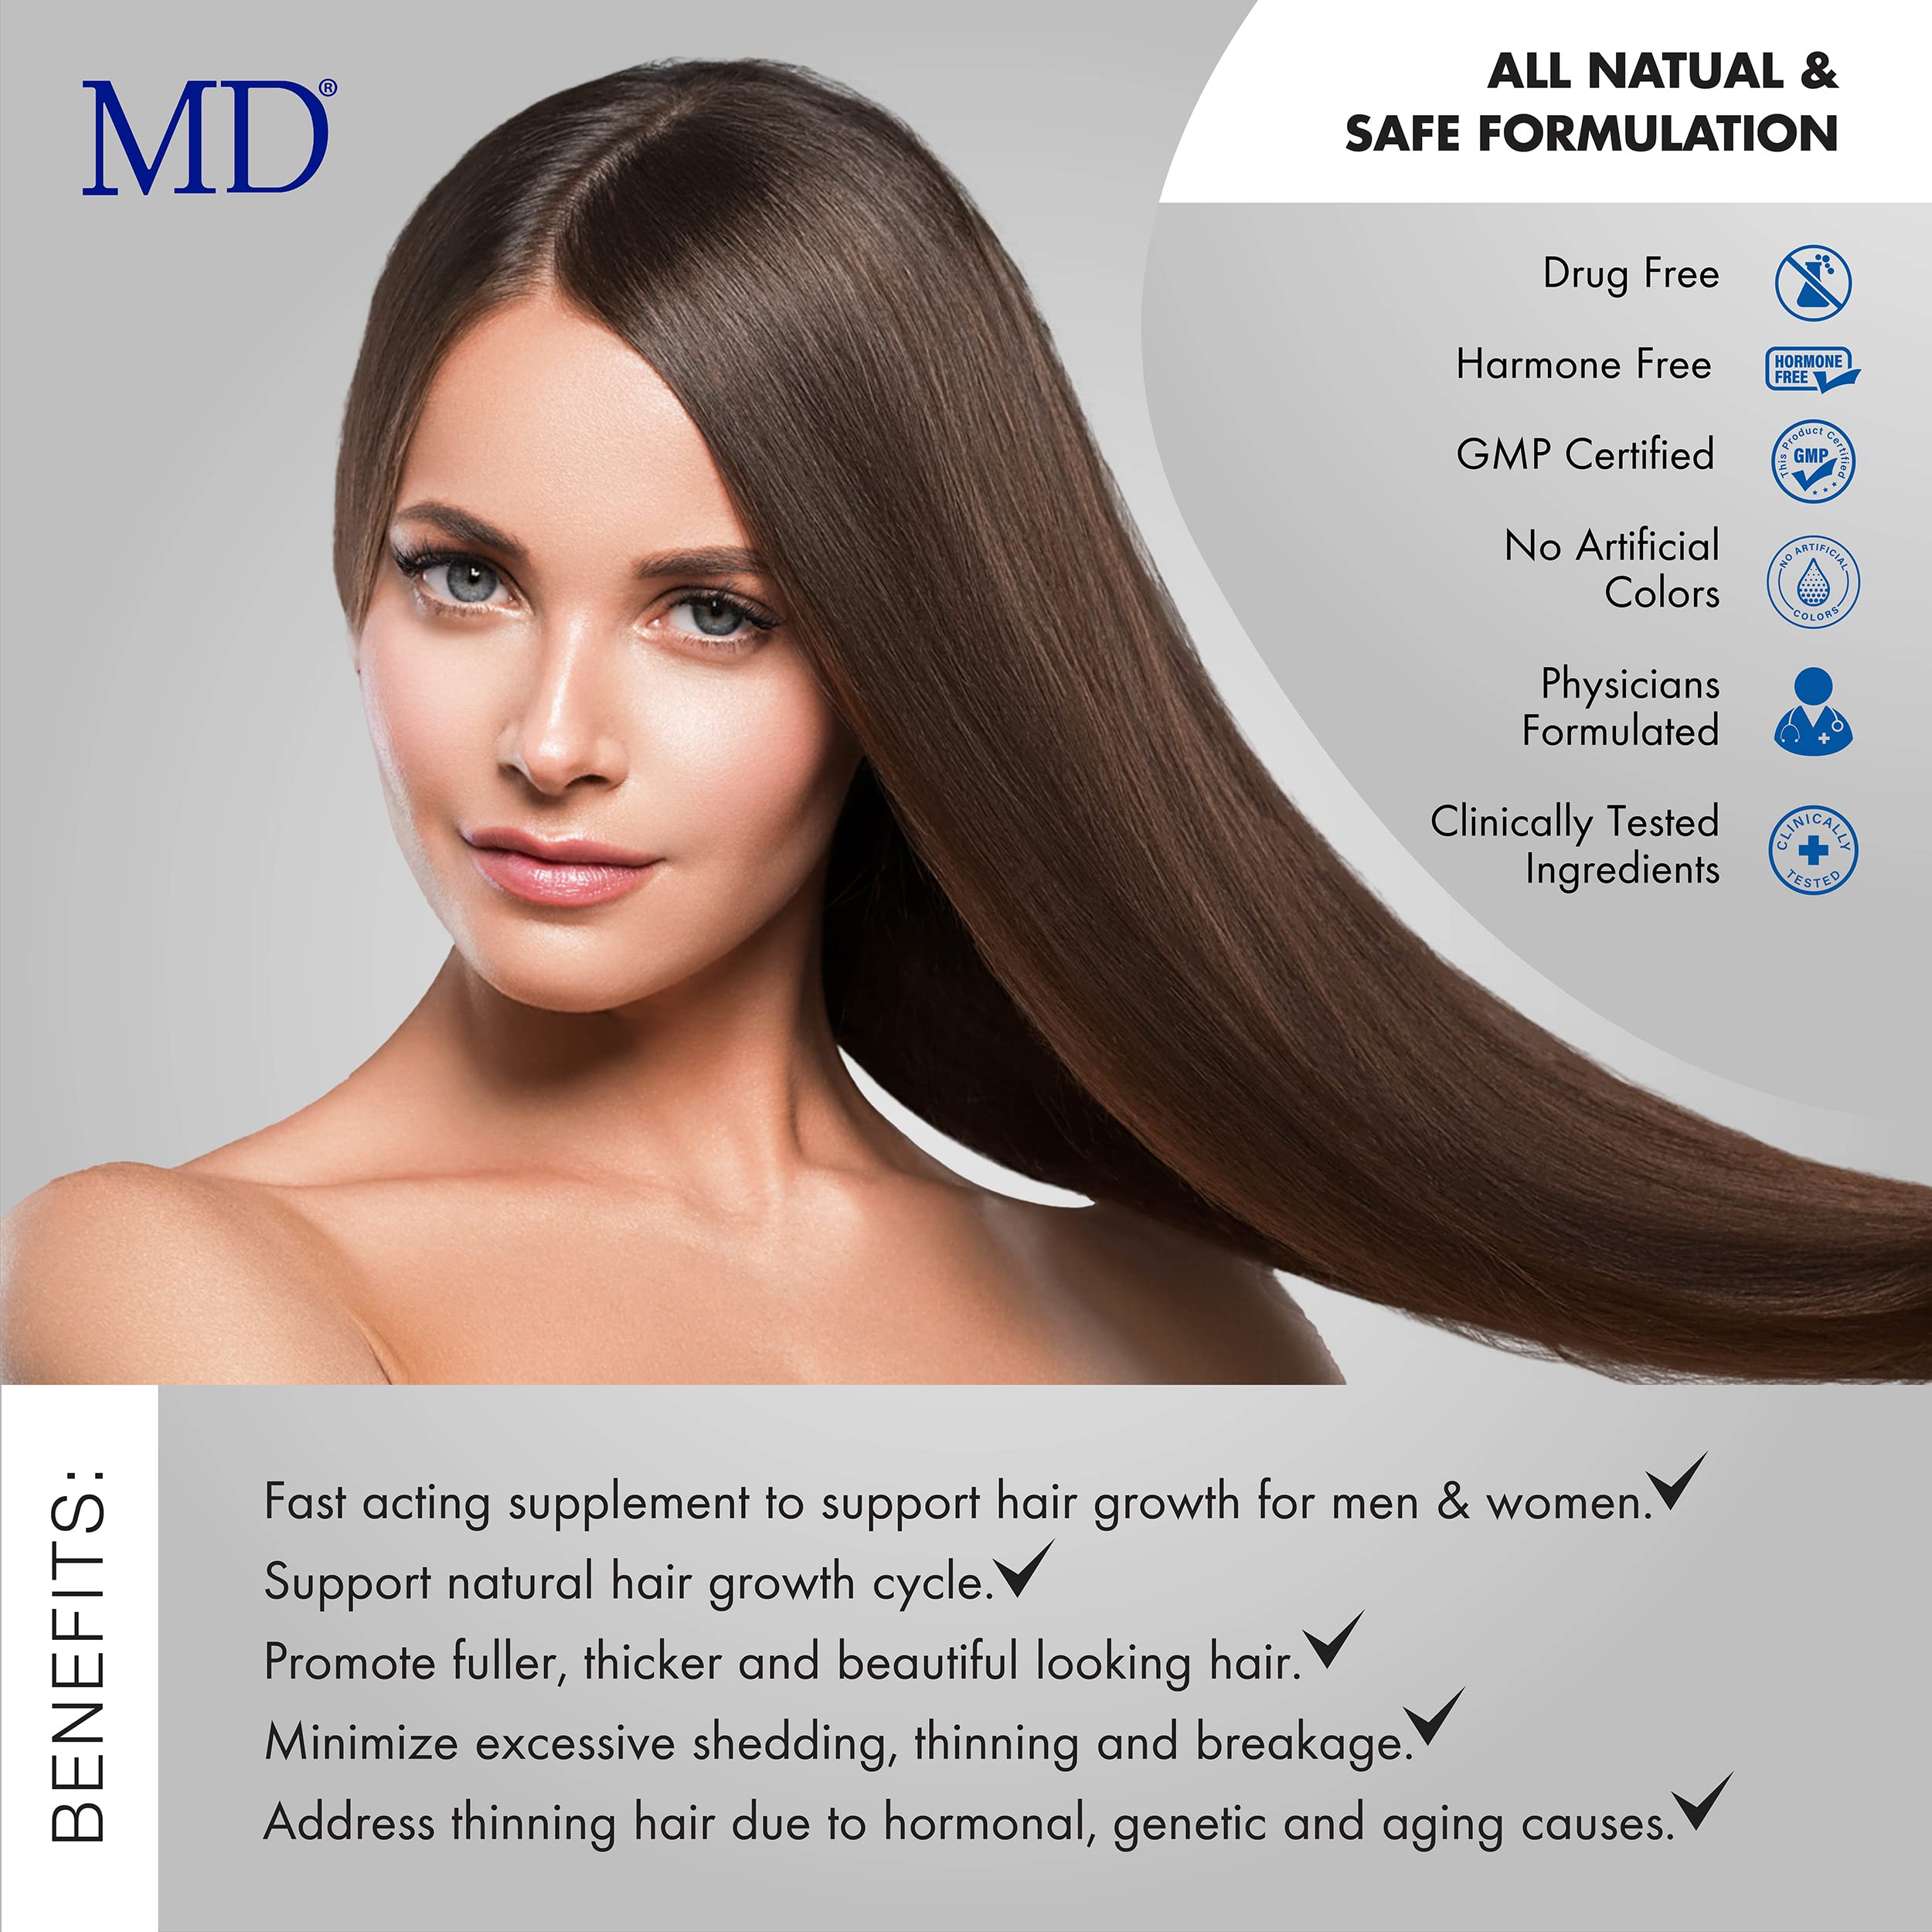 Mua MD Nutri Hair Growth Supplement with Biotin (30 Capsules) | Prevents Hair  Loss, Minimizes Hair Shedding, Thinning, Breakage & Promotes Longer,  Thicker Hair|Skin-Safe & Natural Formulation trên Amazon Mỹ chính hãng